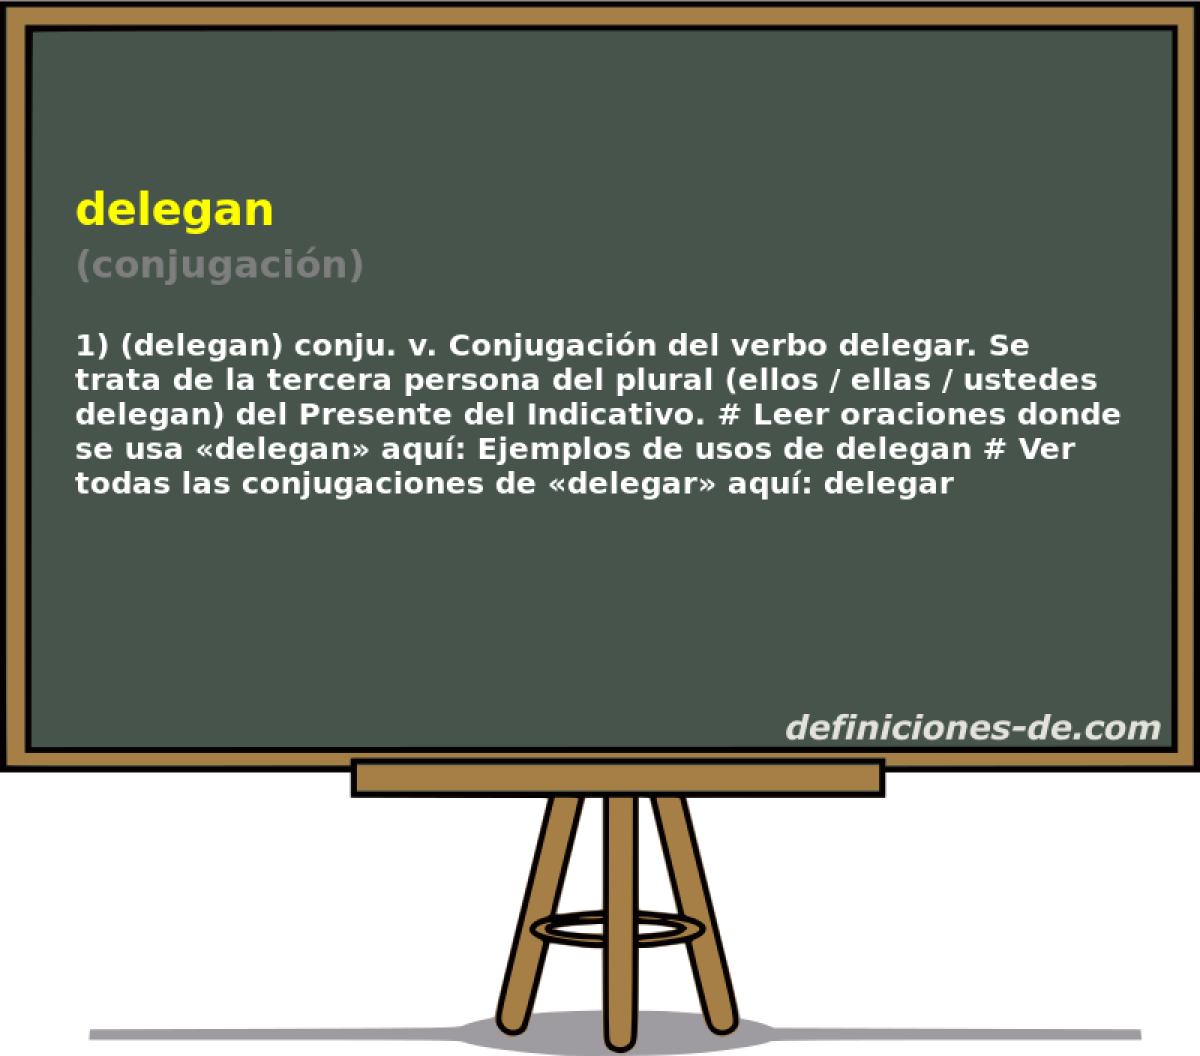 delegan (conjugacin)